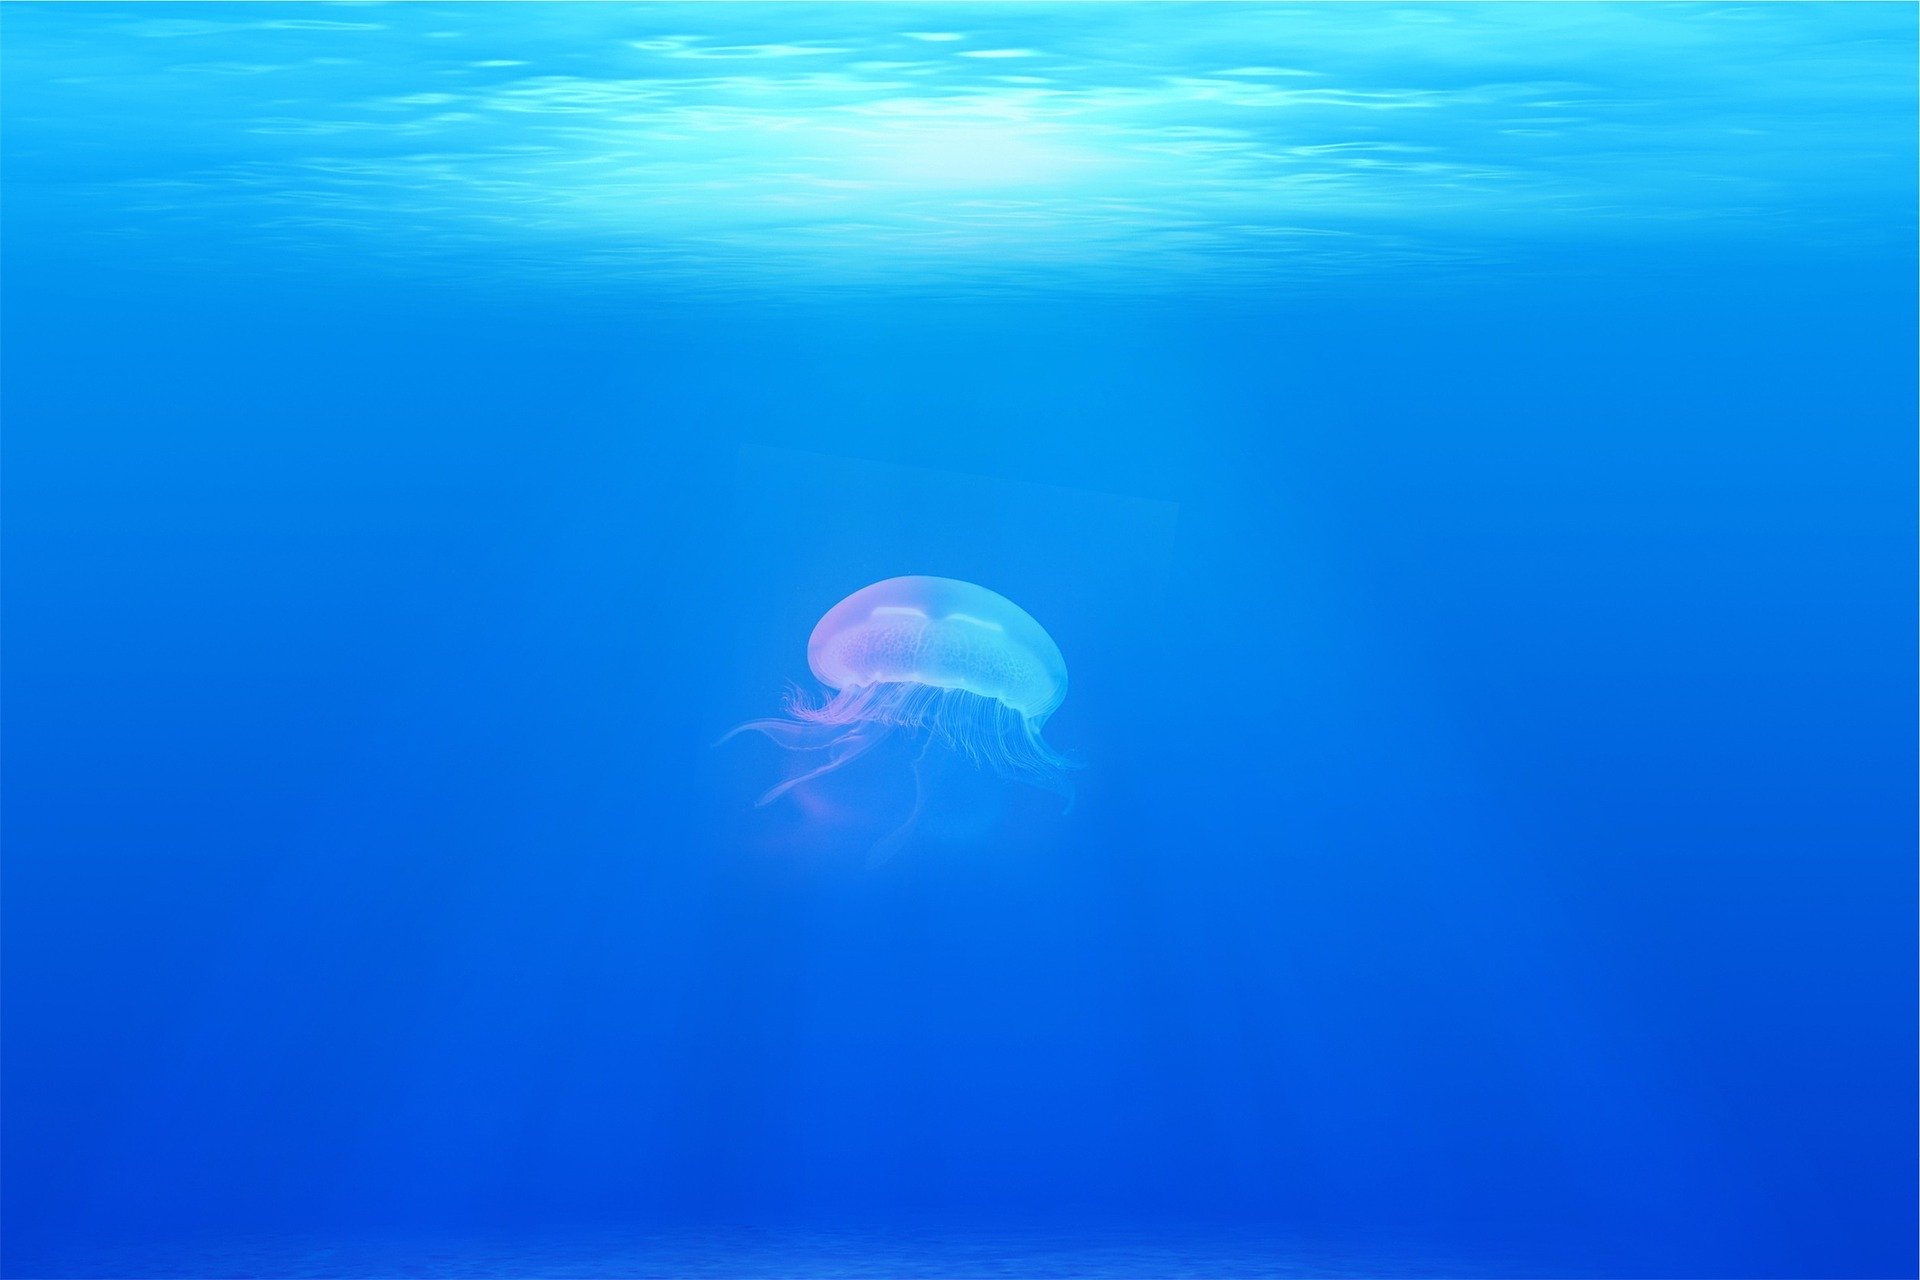 Cómo calmar la picadura de una medusa o "agua viva"